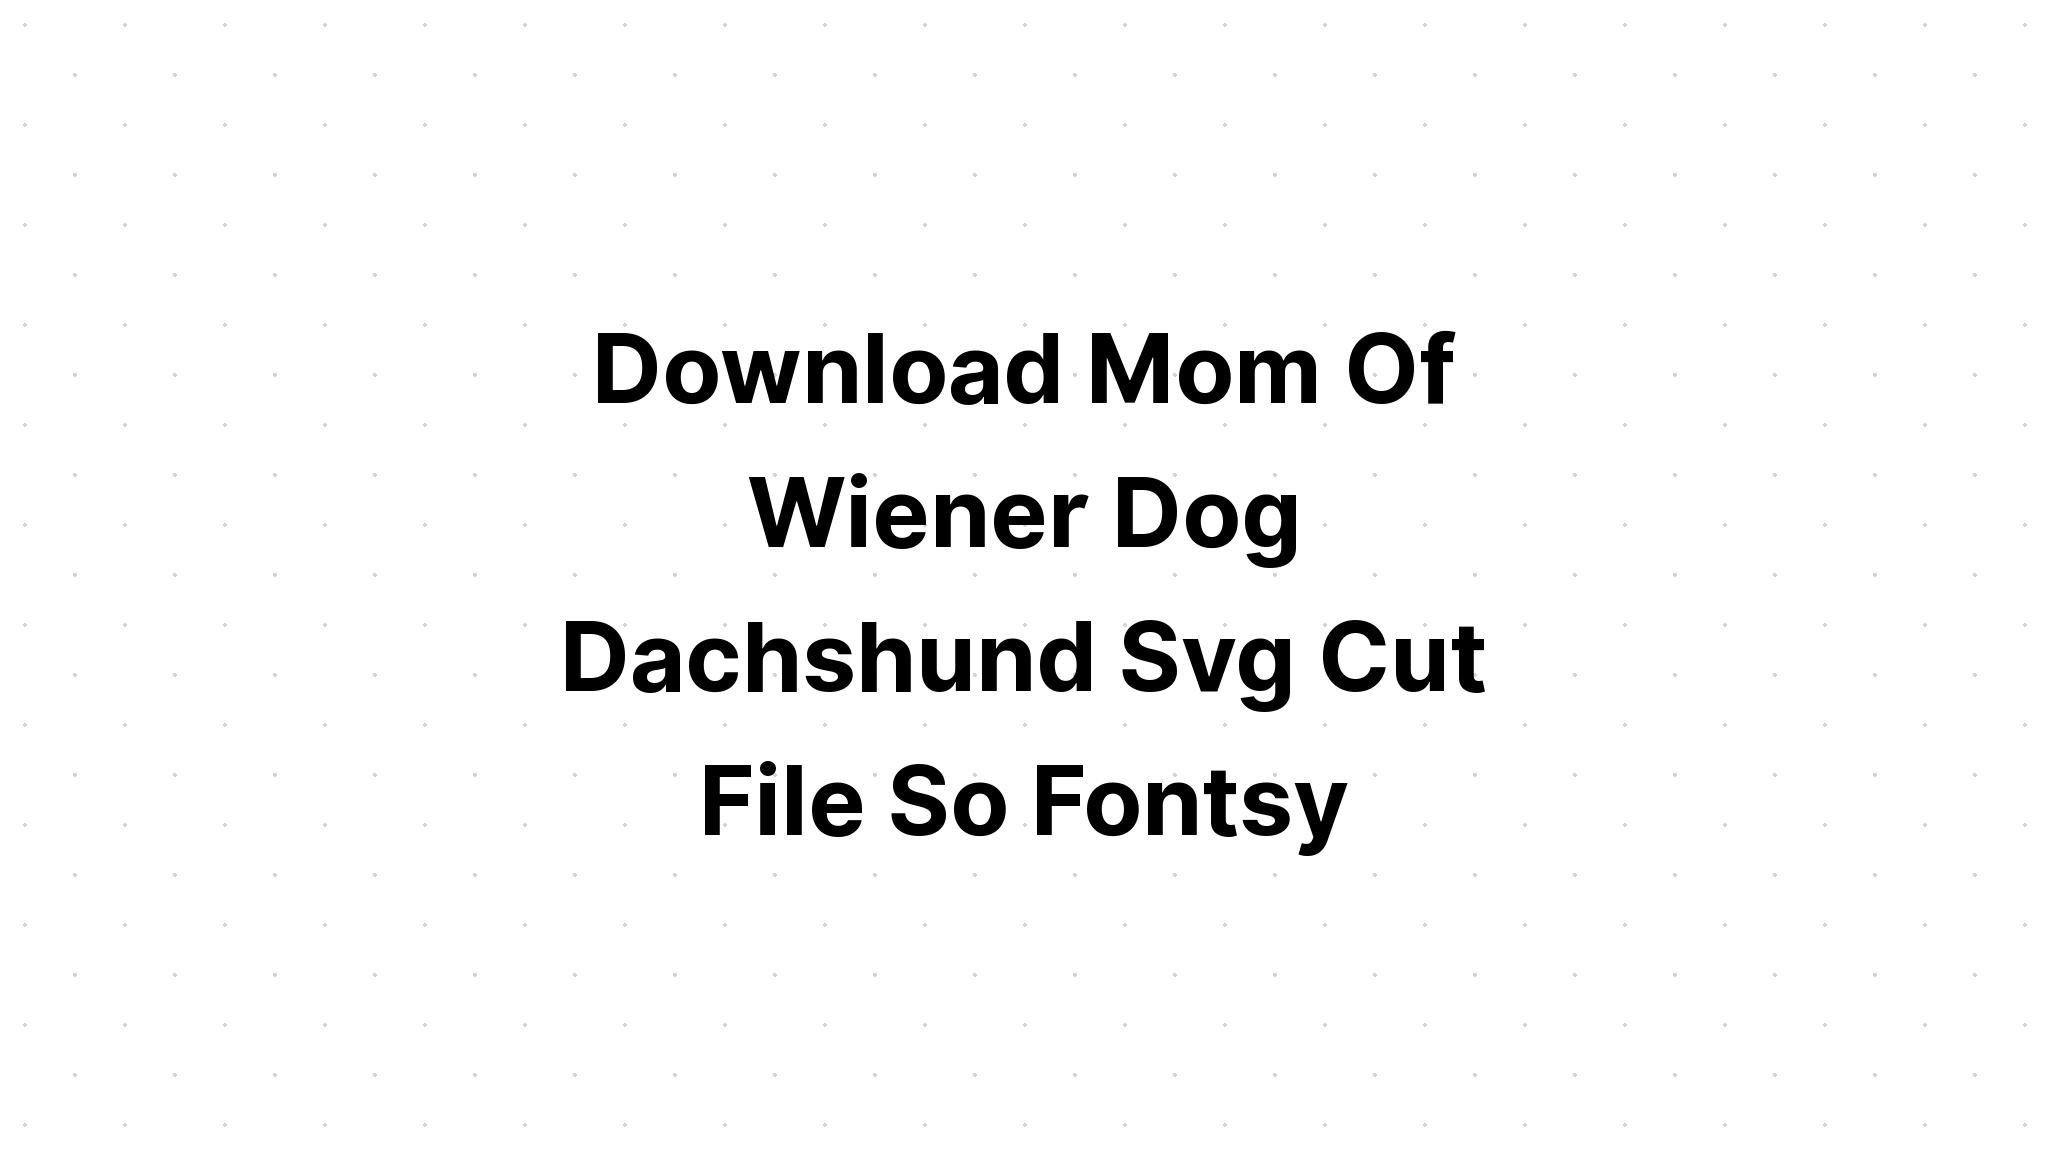 Download Dachshund Dog Zentangle Mandala SVG File